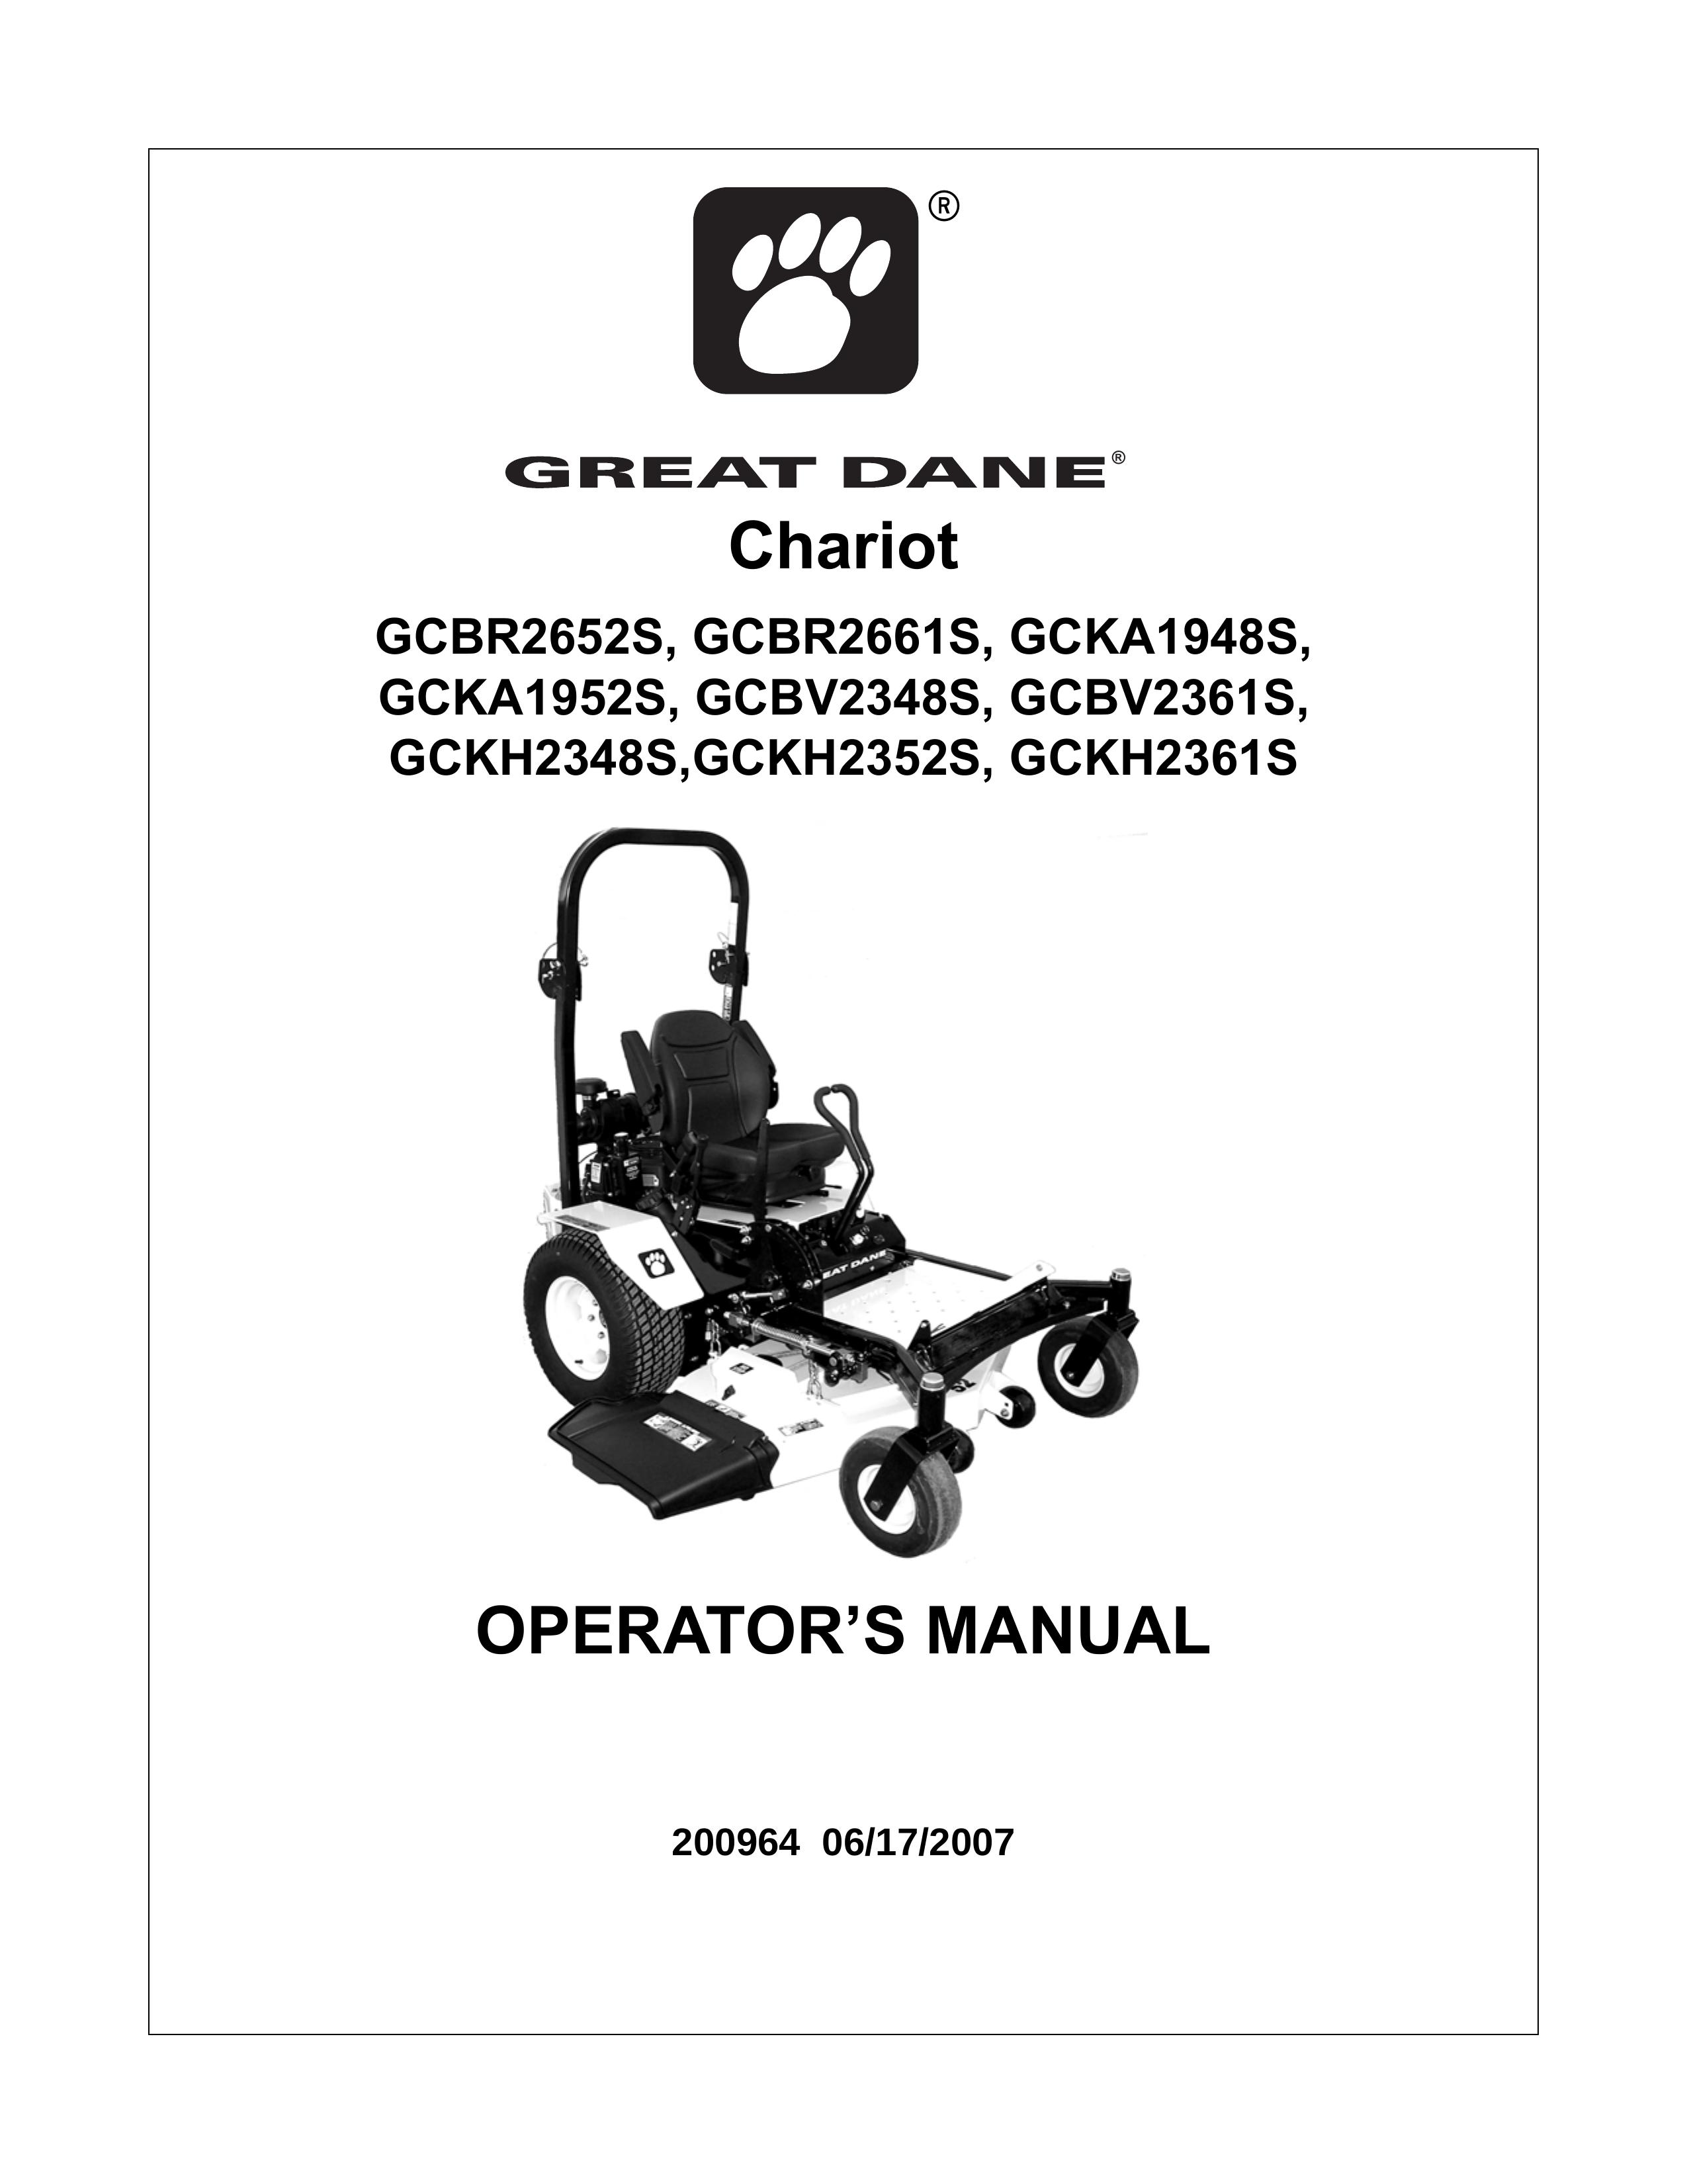 Great Dane GCBV2348S Lawn Mower User Manual